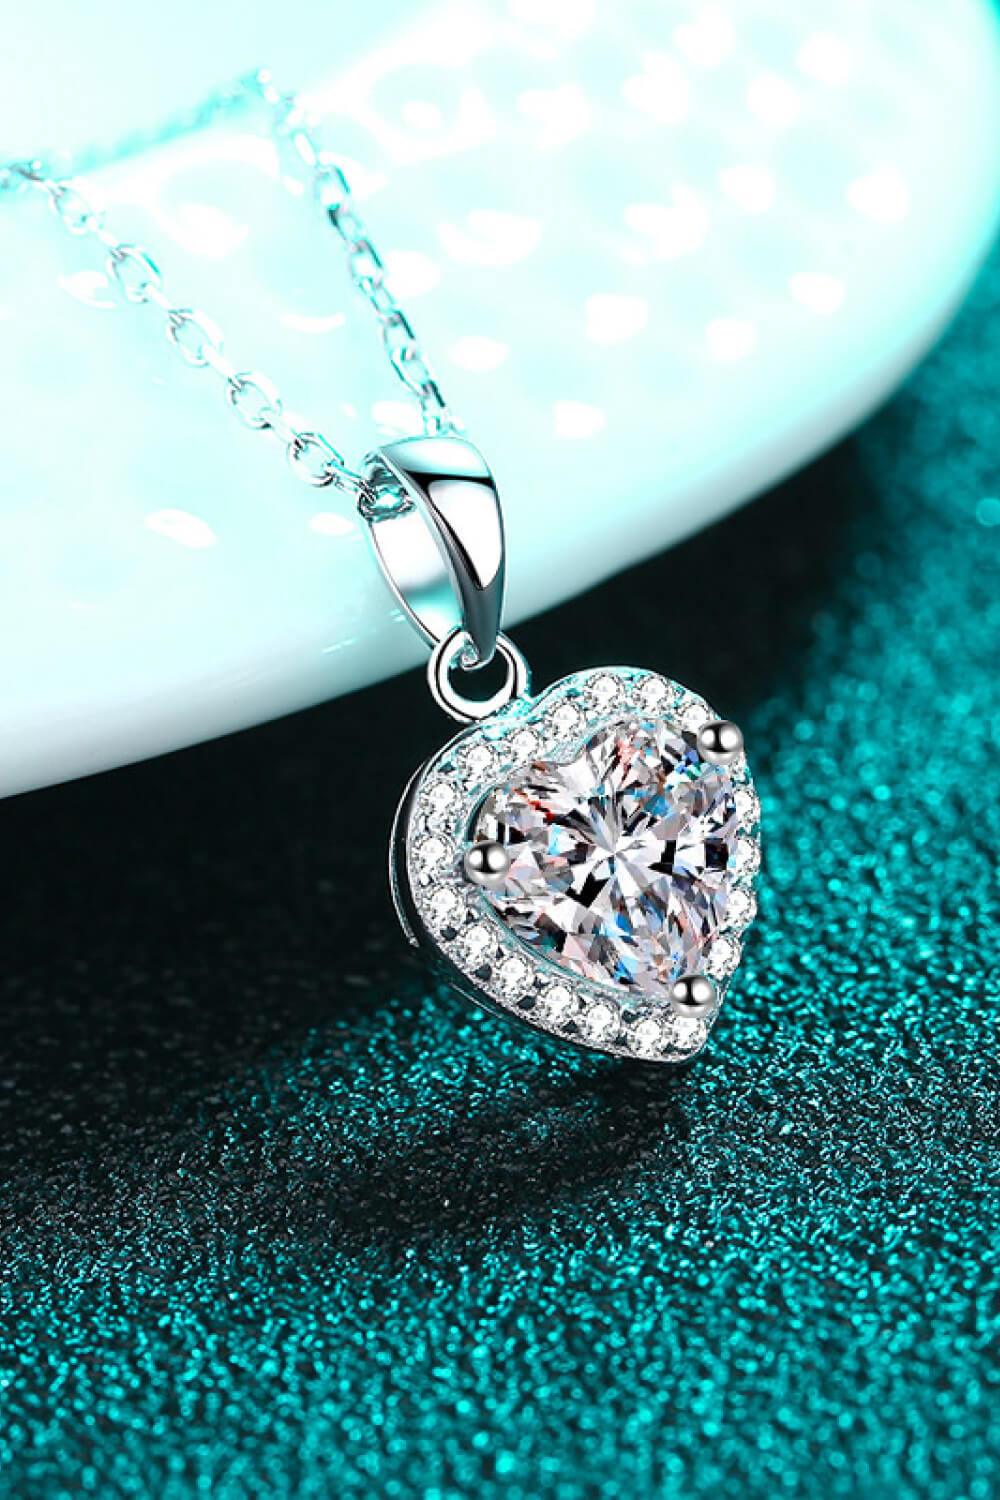 1 Carat Moissanite Heart Pendant Chain Necklace - Trendha